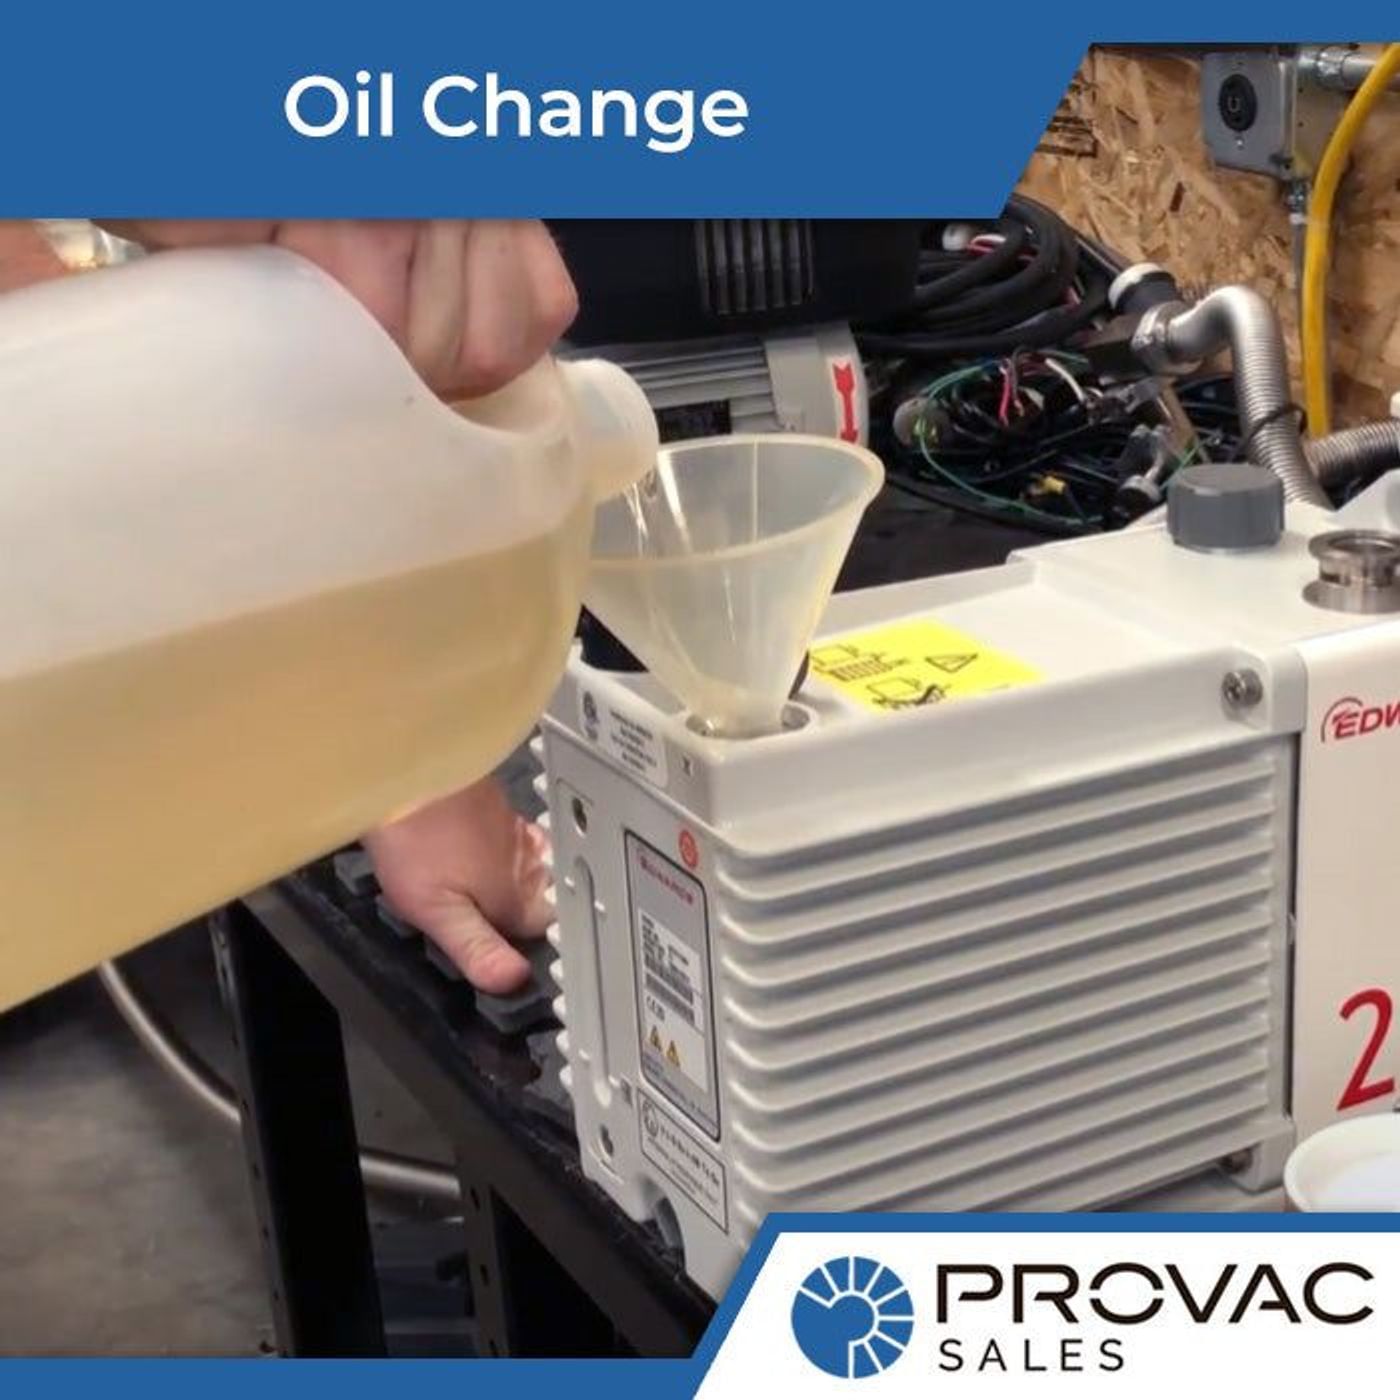 Oil Changes in Rotary Vane Vacuum Pumps